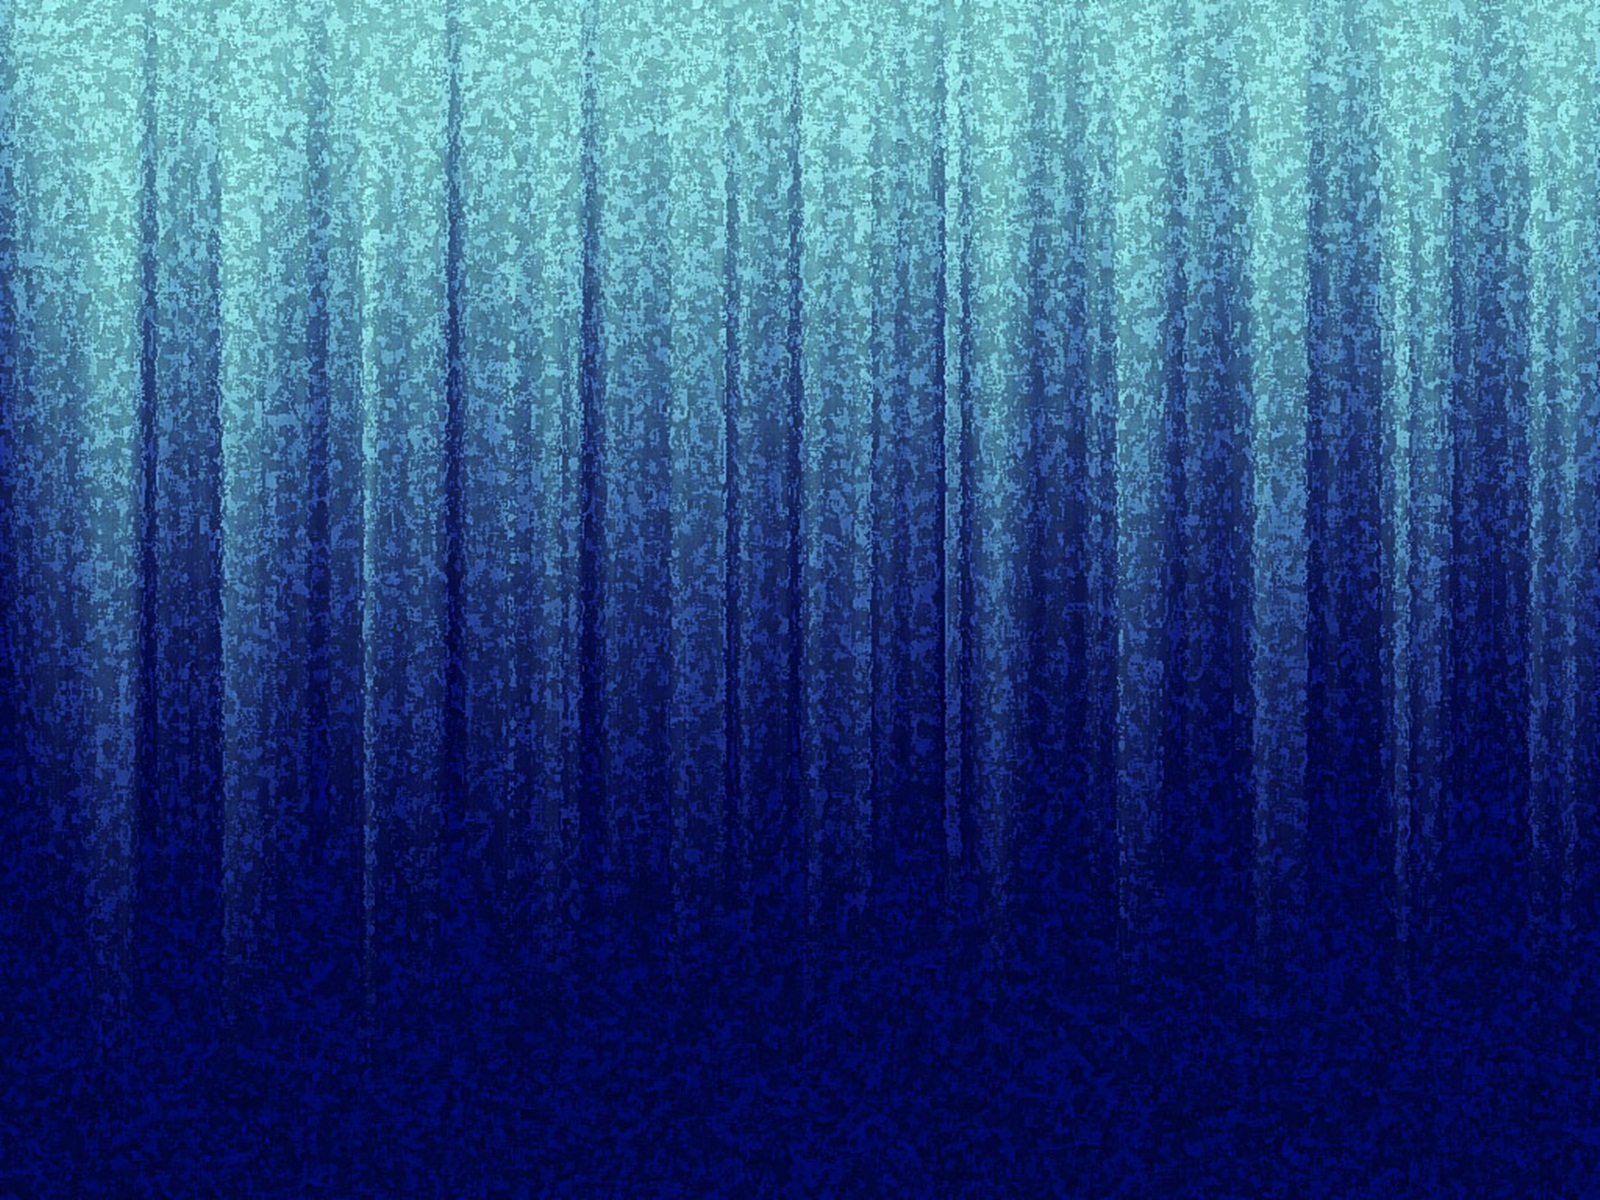 Sweet Blue Computer Wallpapers, Desktop Backgrounds | 1600x1200 ...